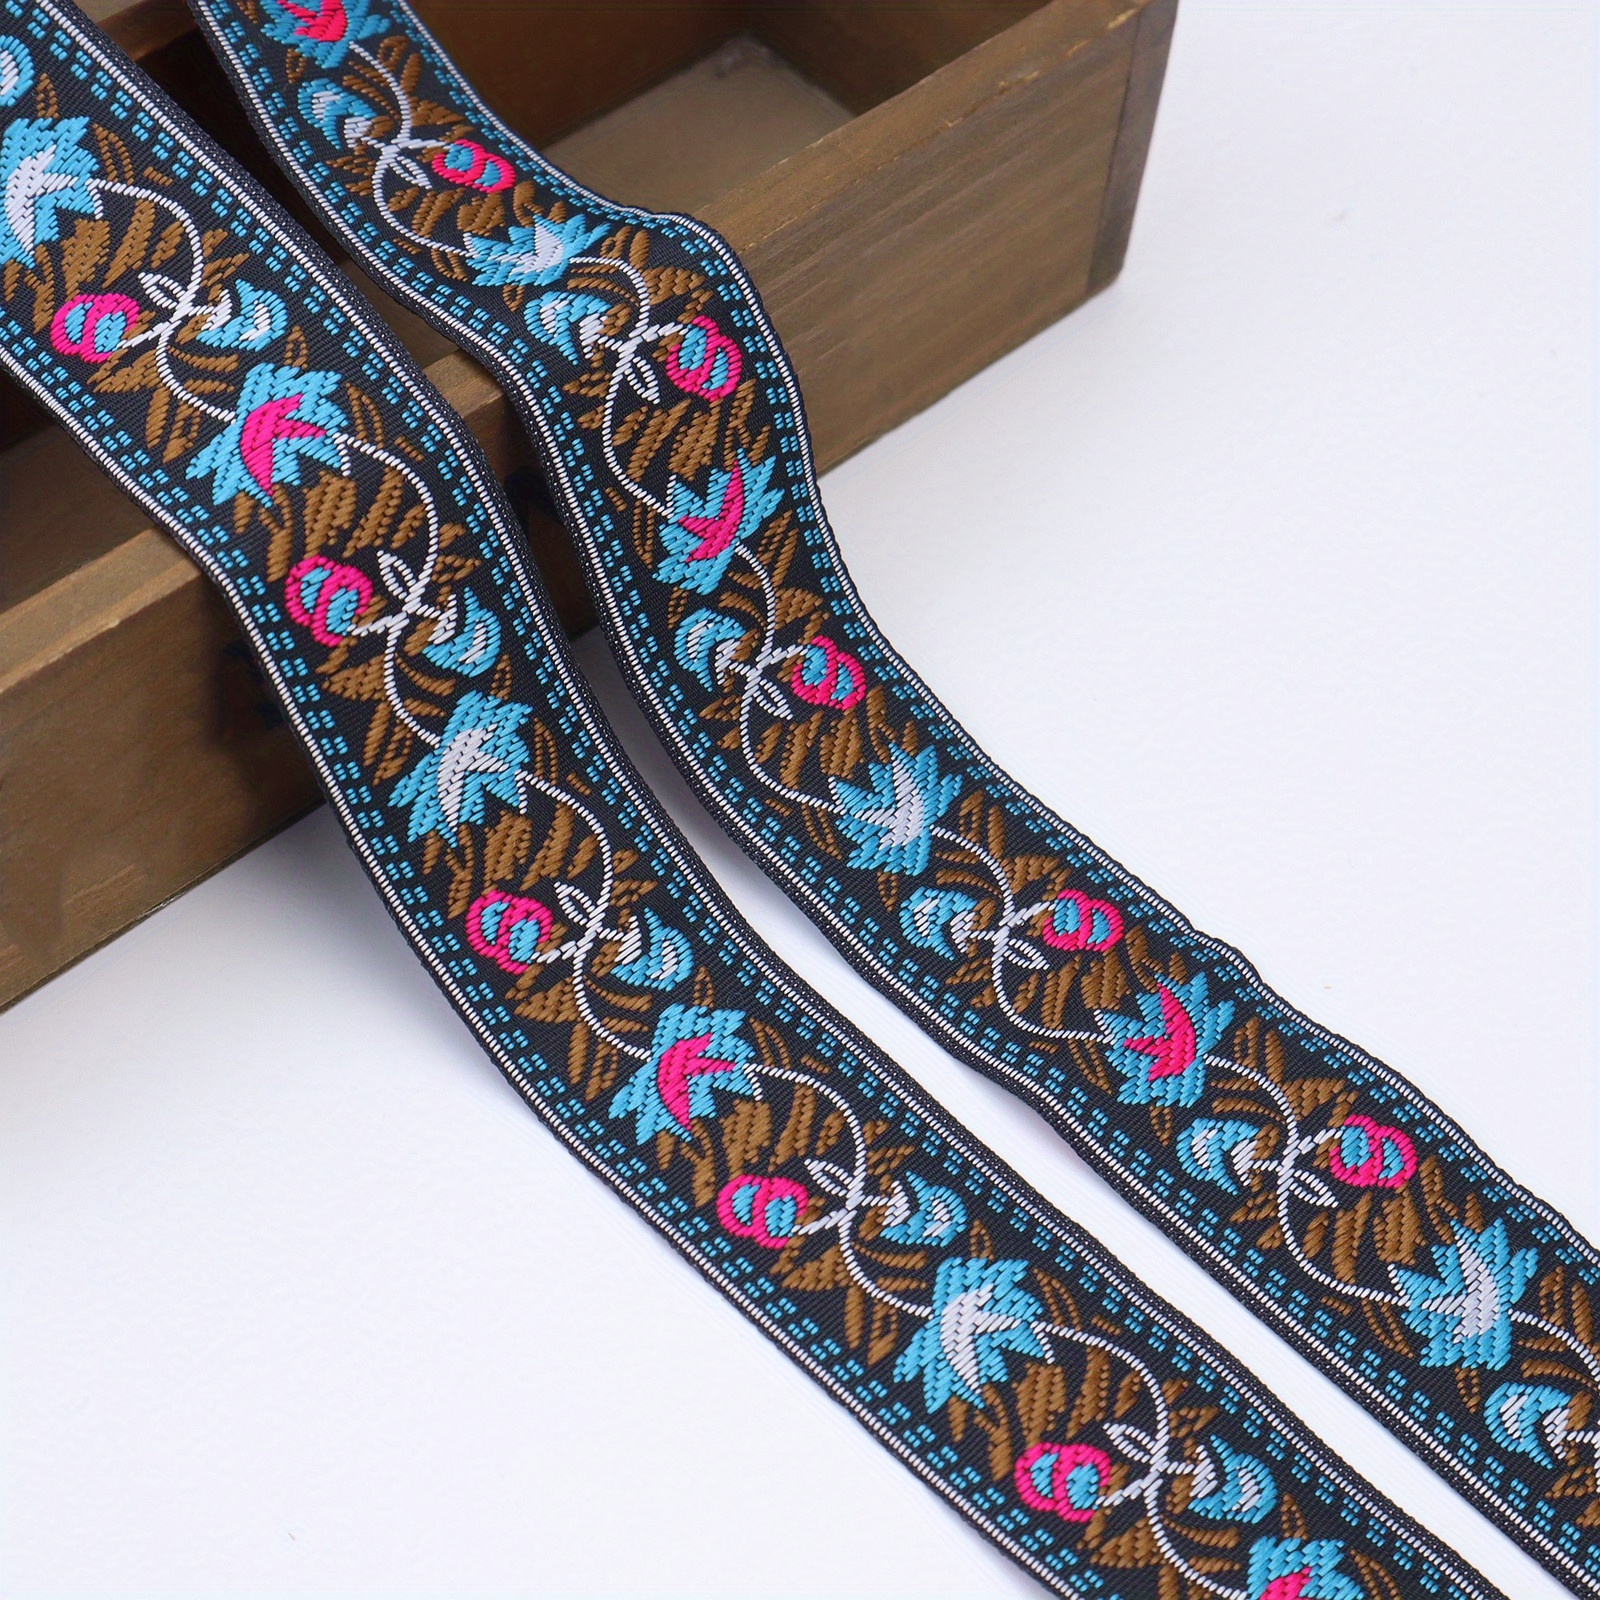 Vintage Jacquard Ribbon Trim, Woven Jacquard Ribbon, Embroidered Sewing  Lace Ribbon Fabric for Decorative Trim, 5 Yards Width 2 Inch (Jacquard Trim